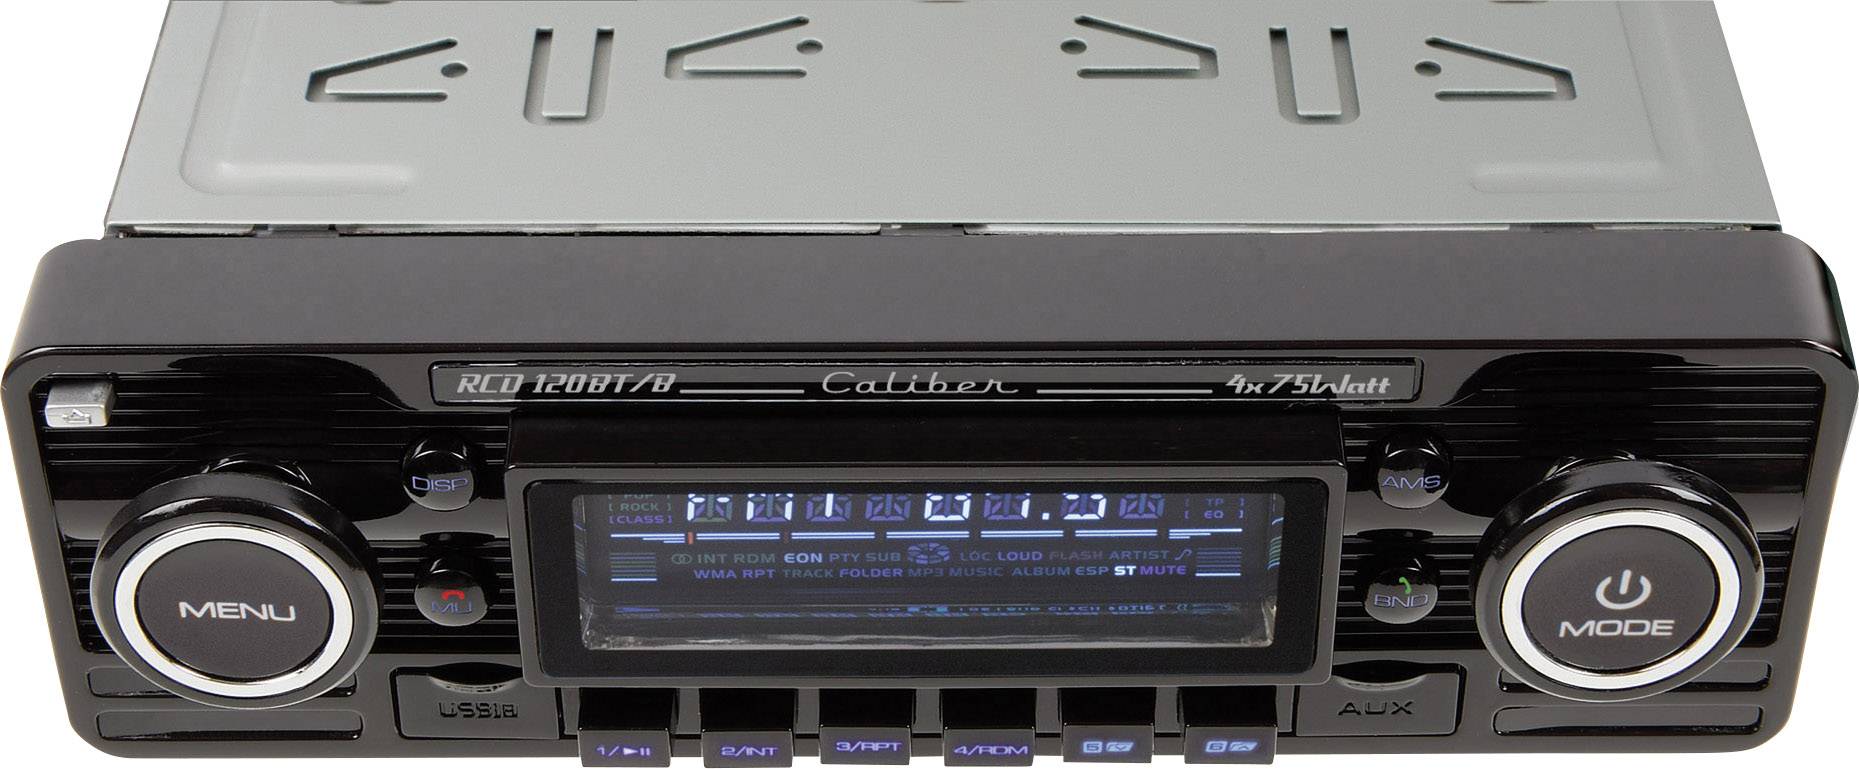 Relatieve grootte Split rustig aan Caliber RCD-120BT/B Car stereo Retro design, Bluetooth handsfree set |  Conrad.com